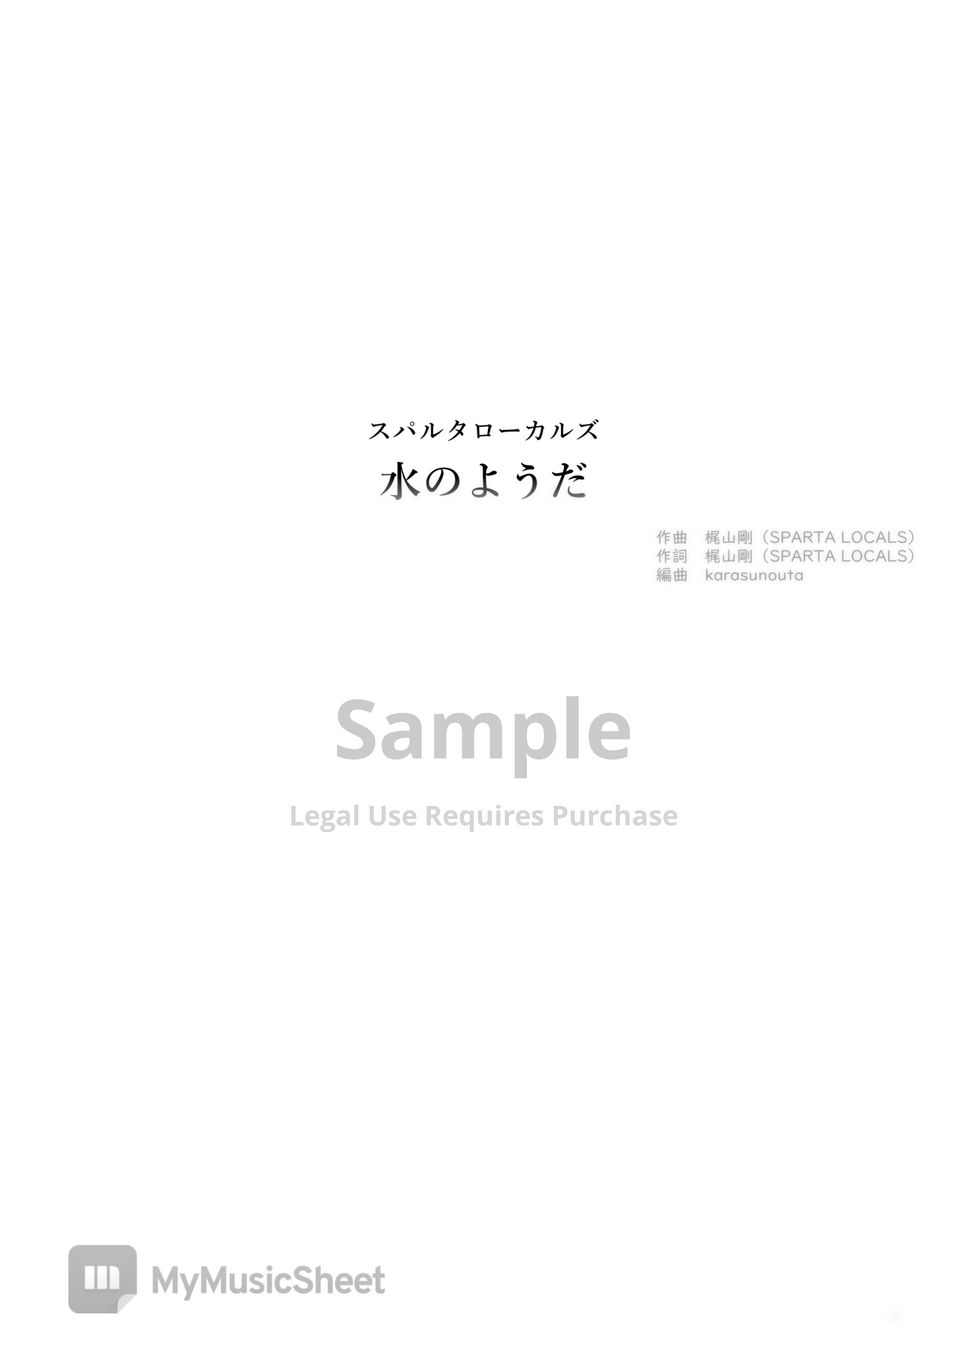 SPARTA LOCALS - Mizu no Youda (Piano&Vo / Lyrics / Chords) by karasunouta